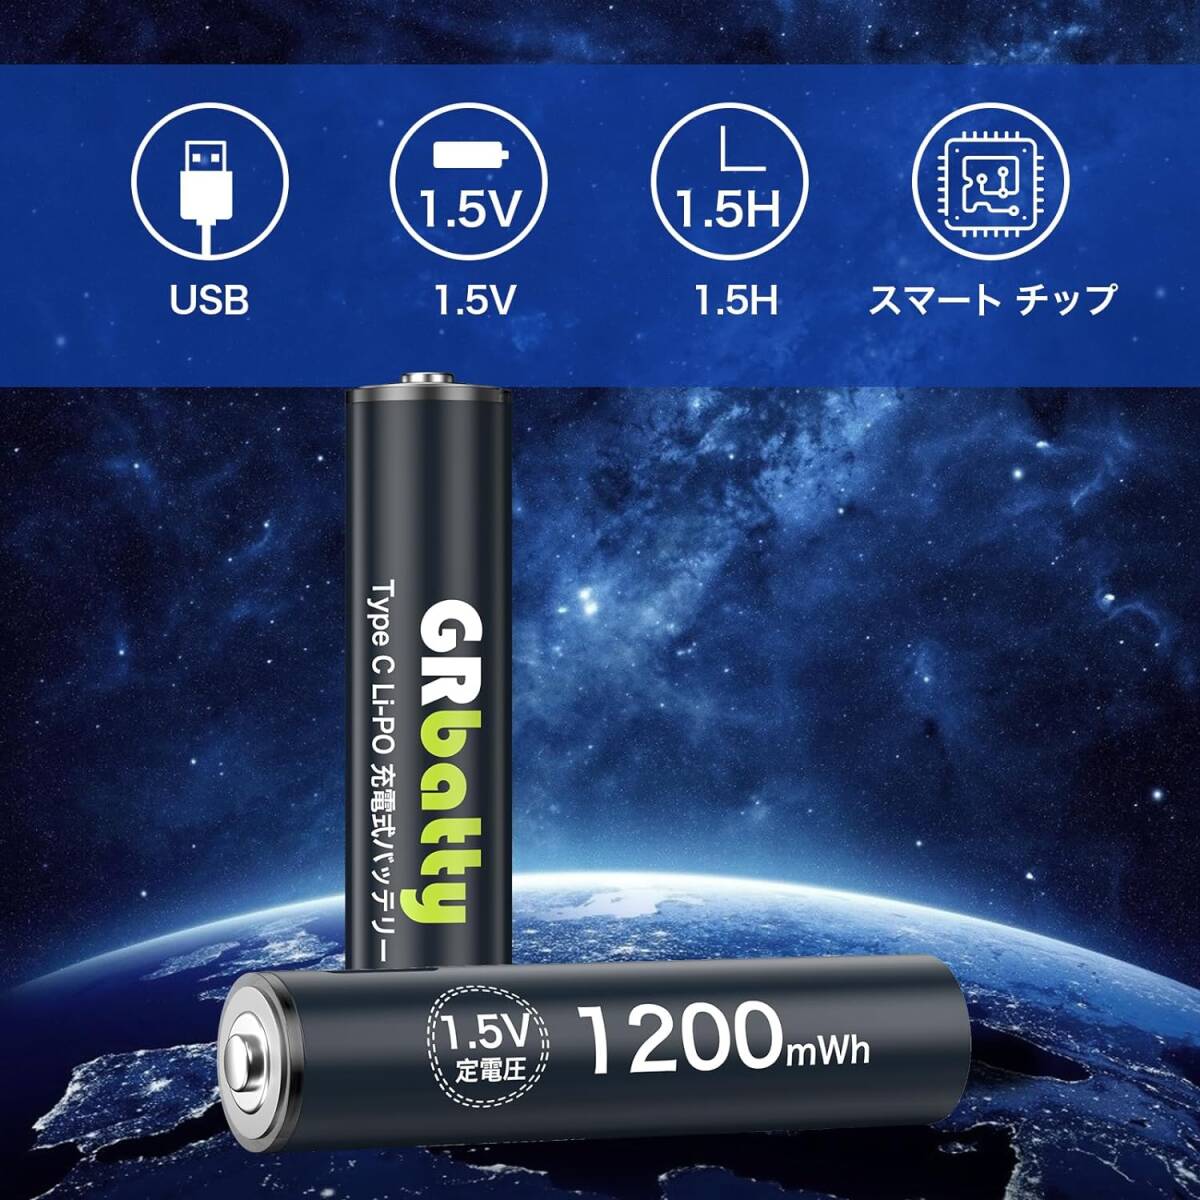 USB single 4 shape lithium battery *8 GRbatty single 4 shape lithium battery USB direct charge single four battery (1200mWh*8) set 1.5V